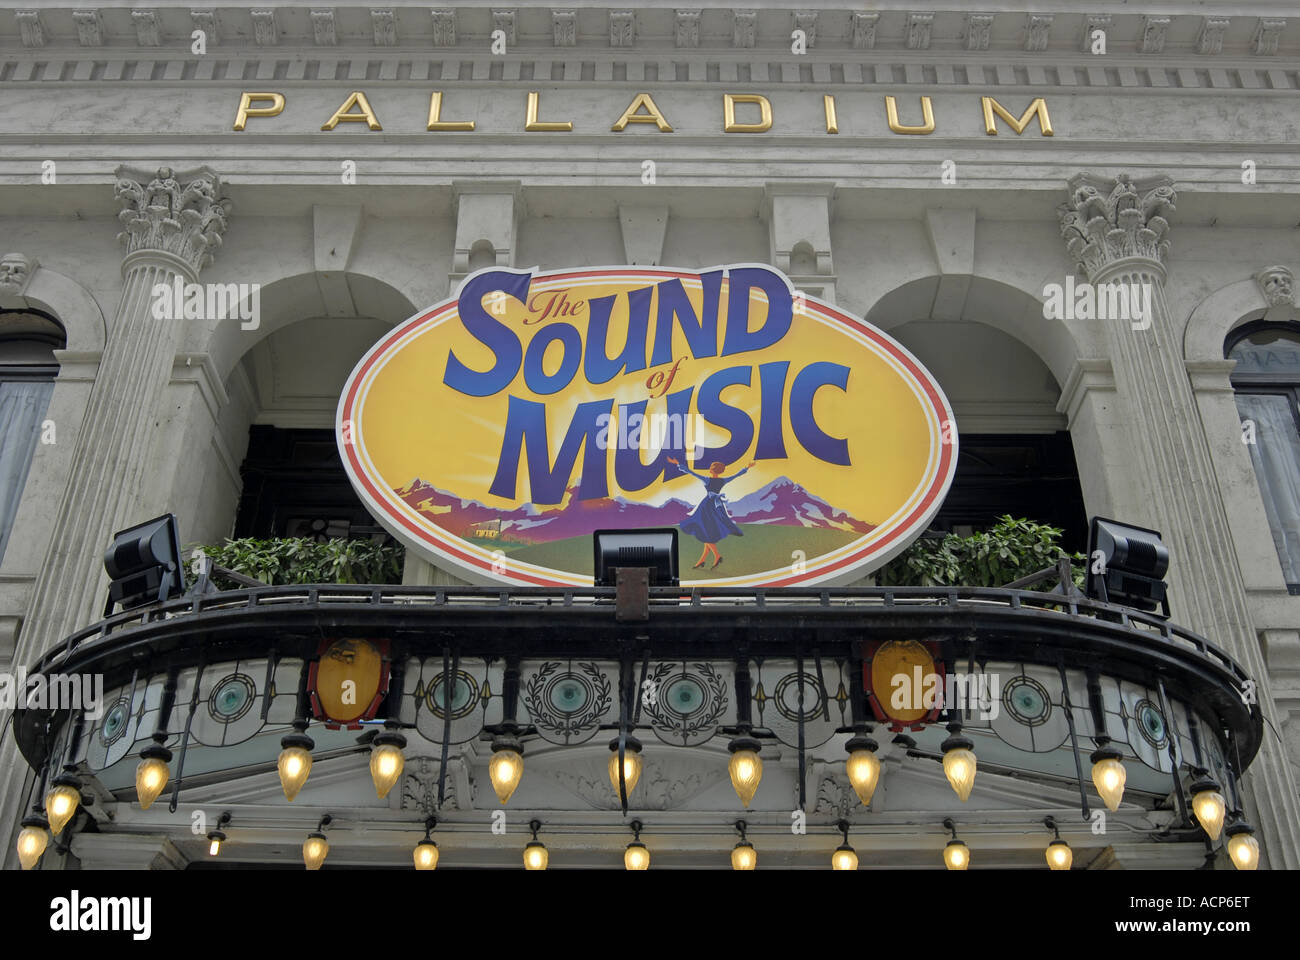 Sound of Music poster outside palladium  theatre,London,England,GB,UK,EU,Europe Stock Photo